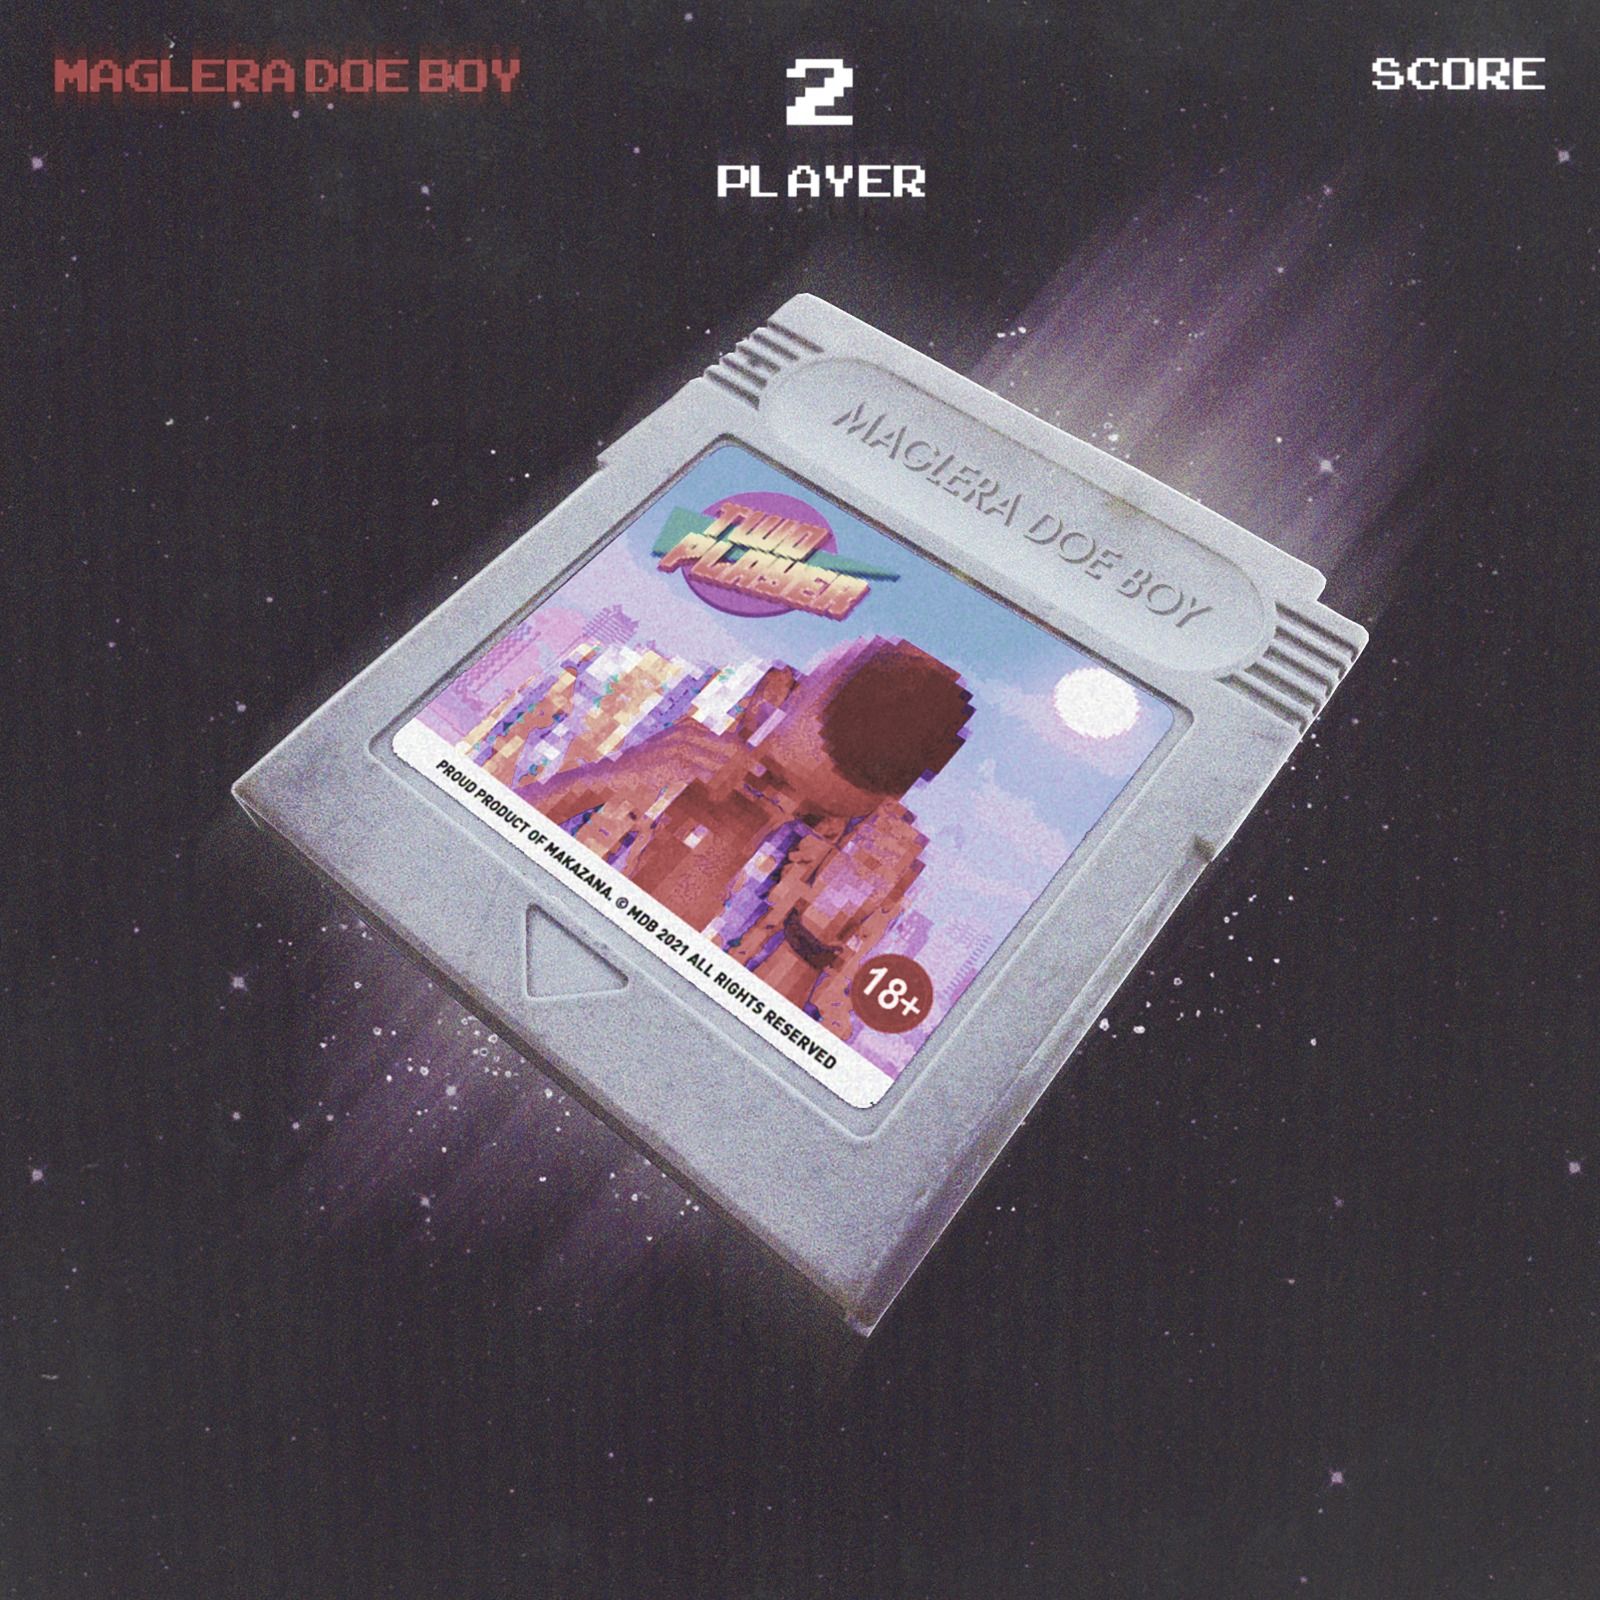 [Album] Maglera Doe Boy – 2Player (The Digital Score)